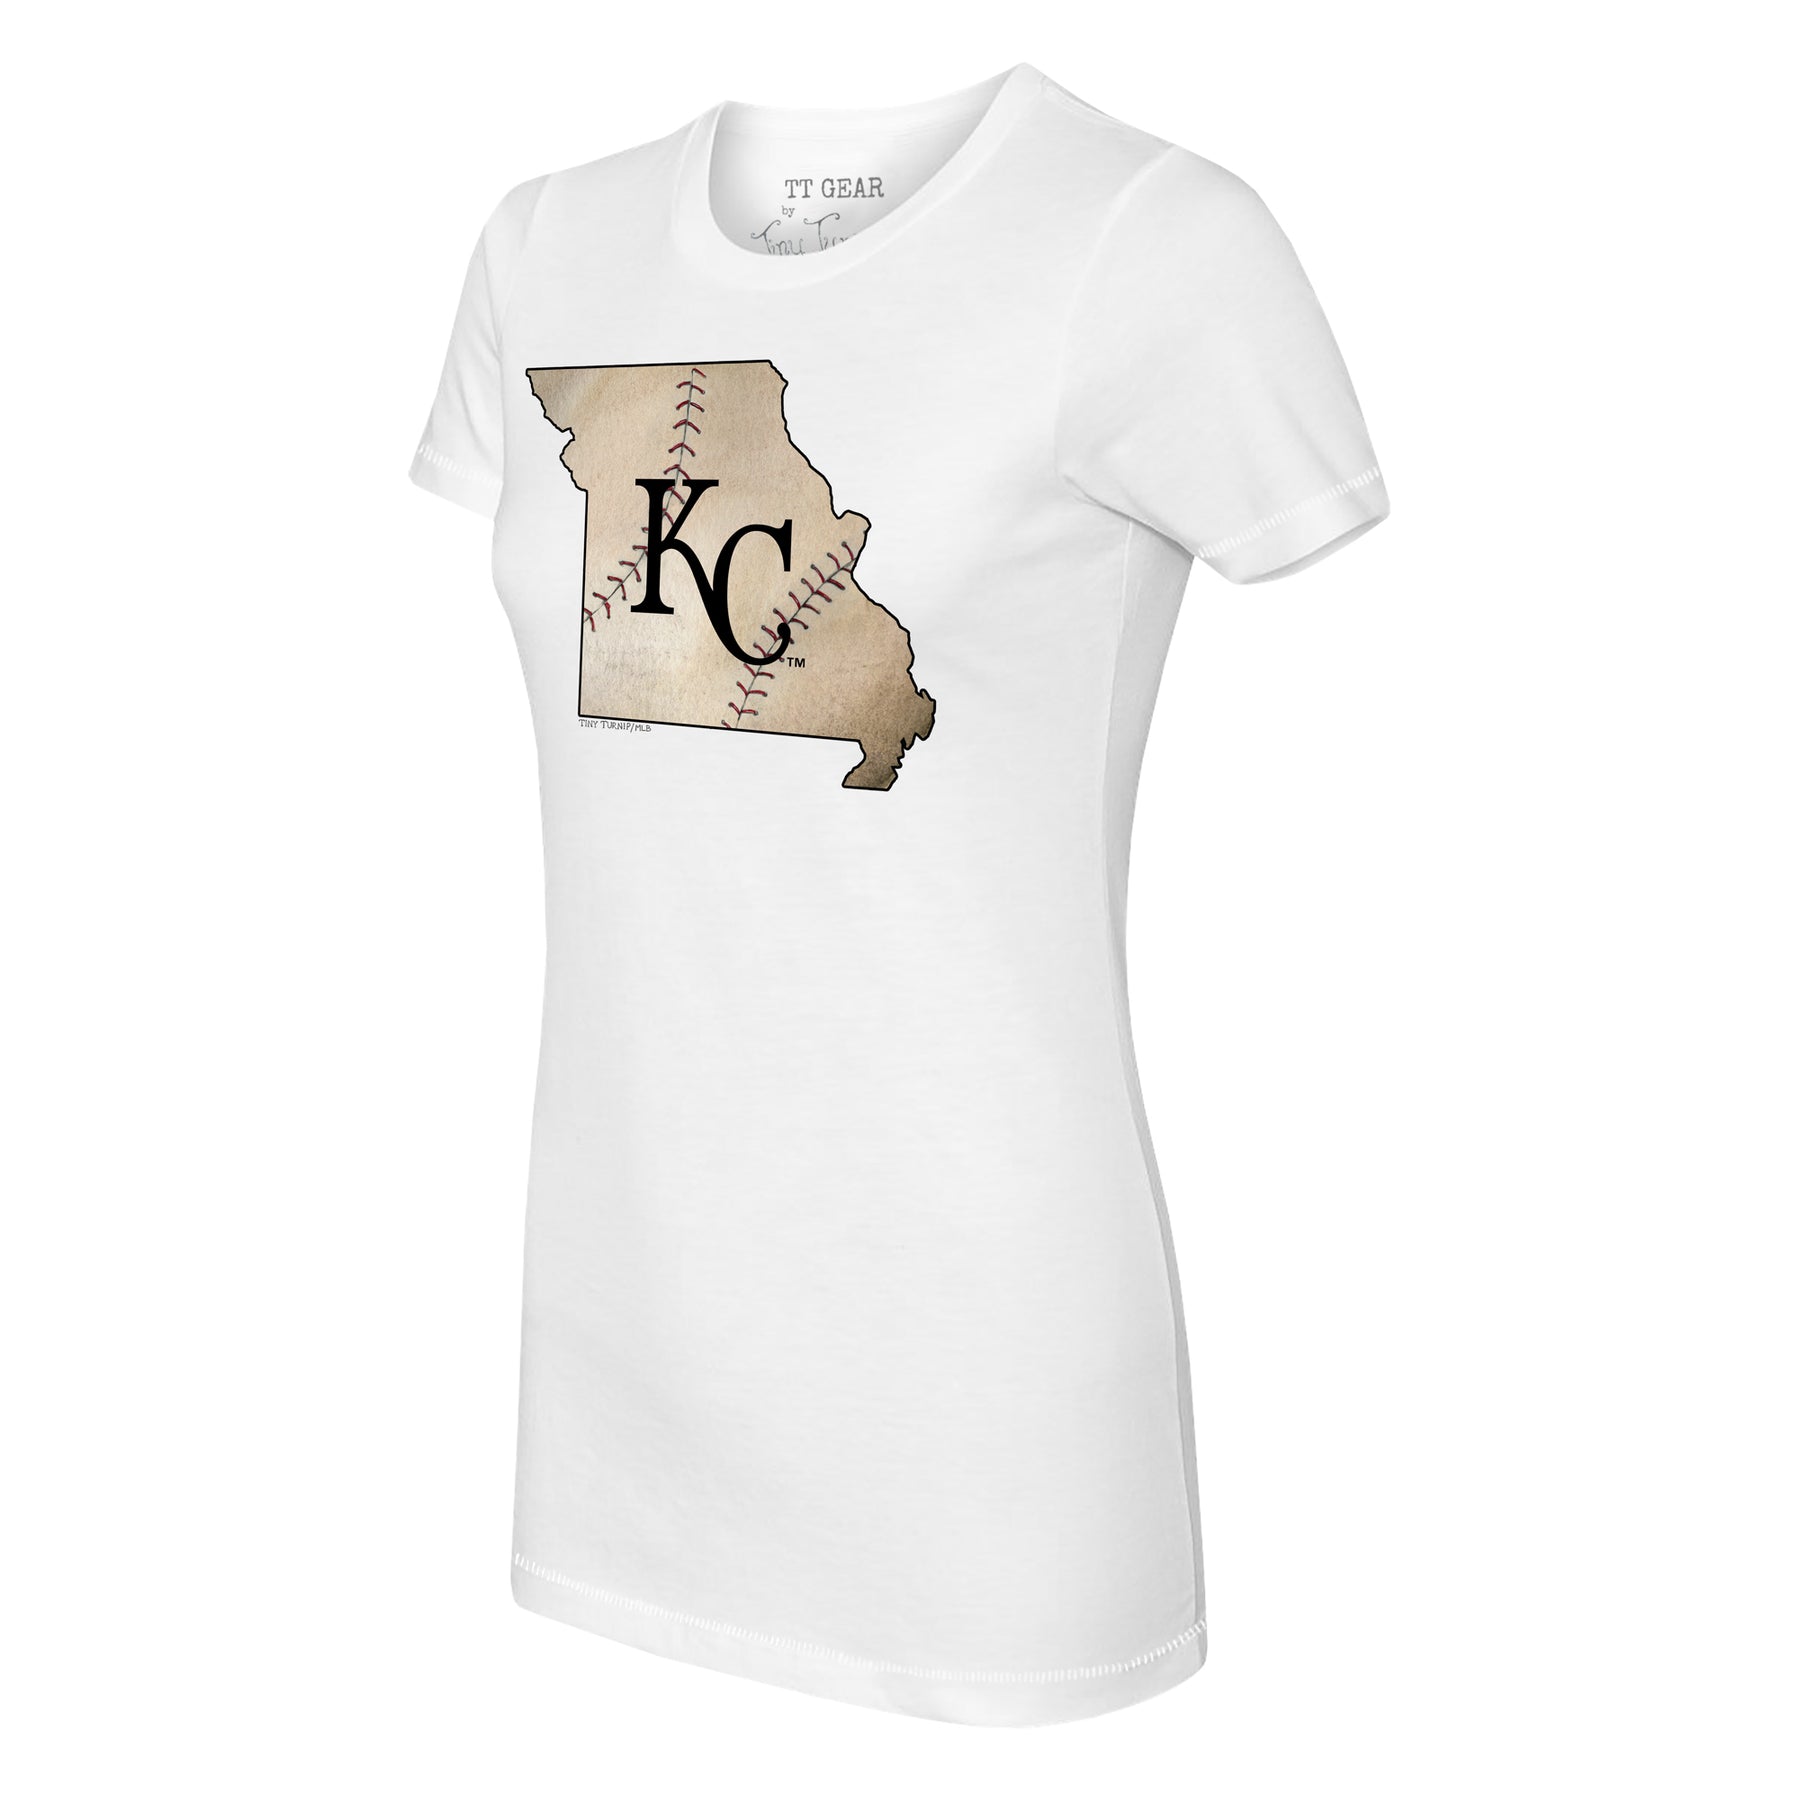 Kansas City Royals State Outline Tee Shirt 2T / White